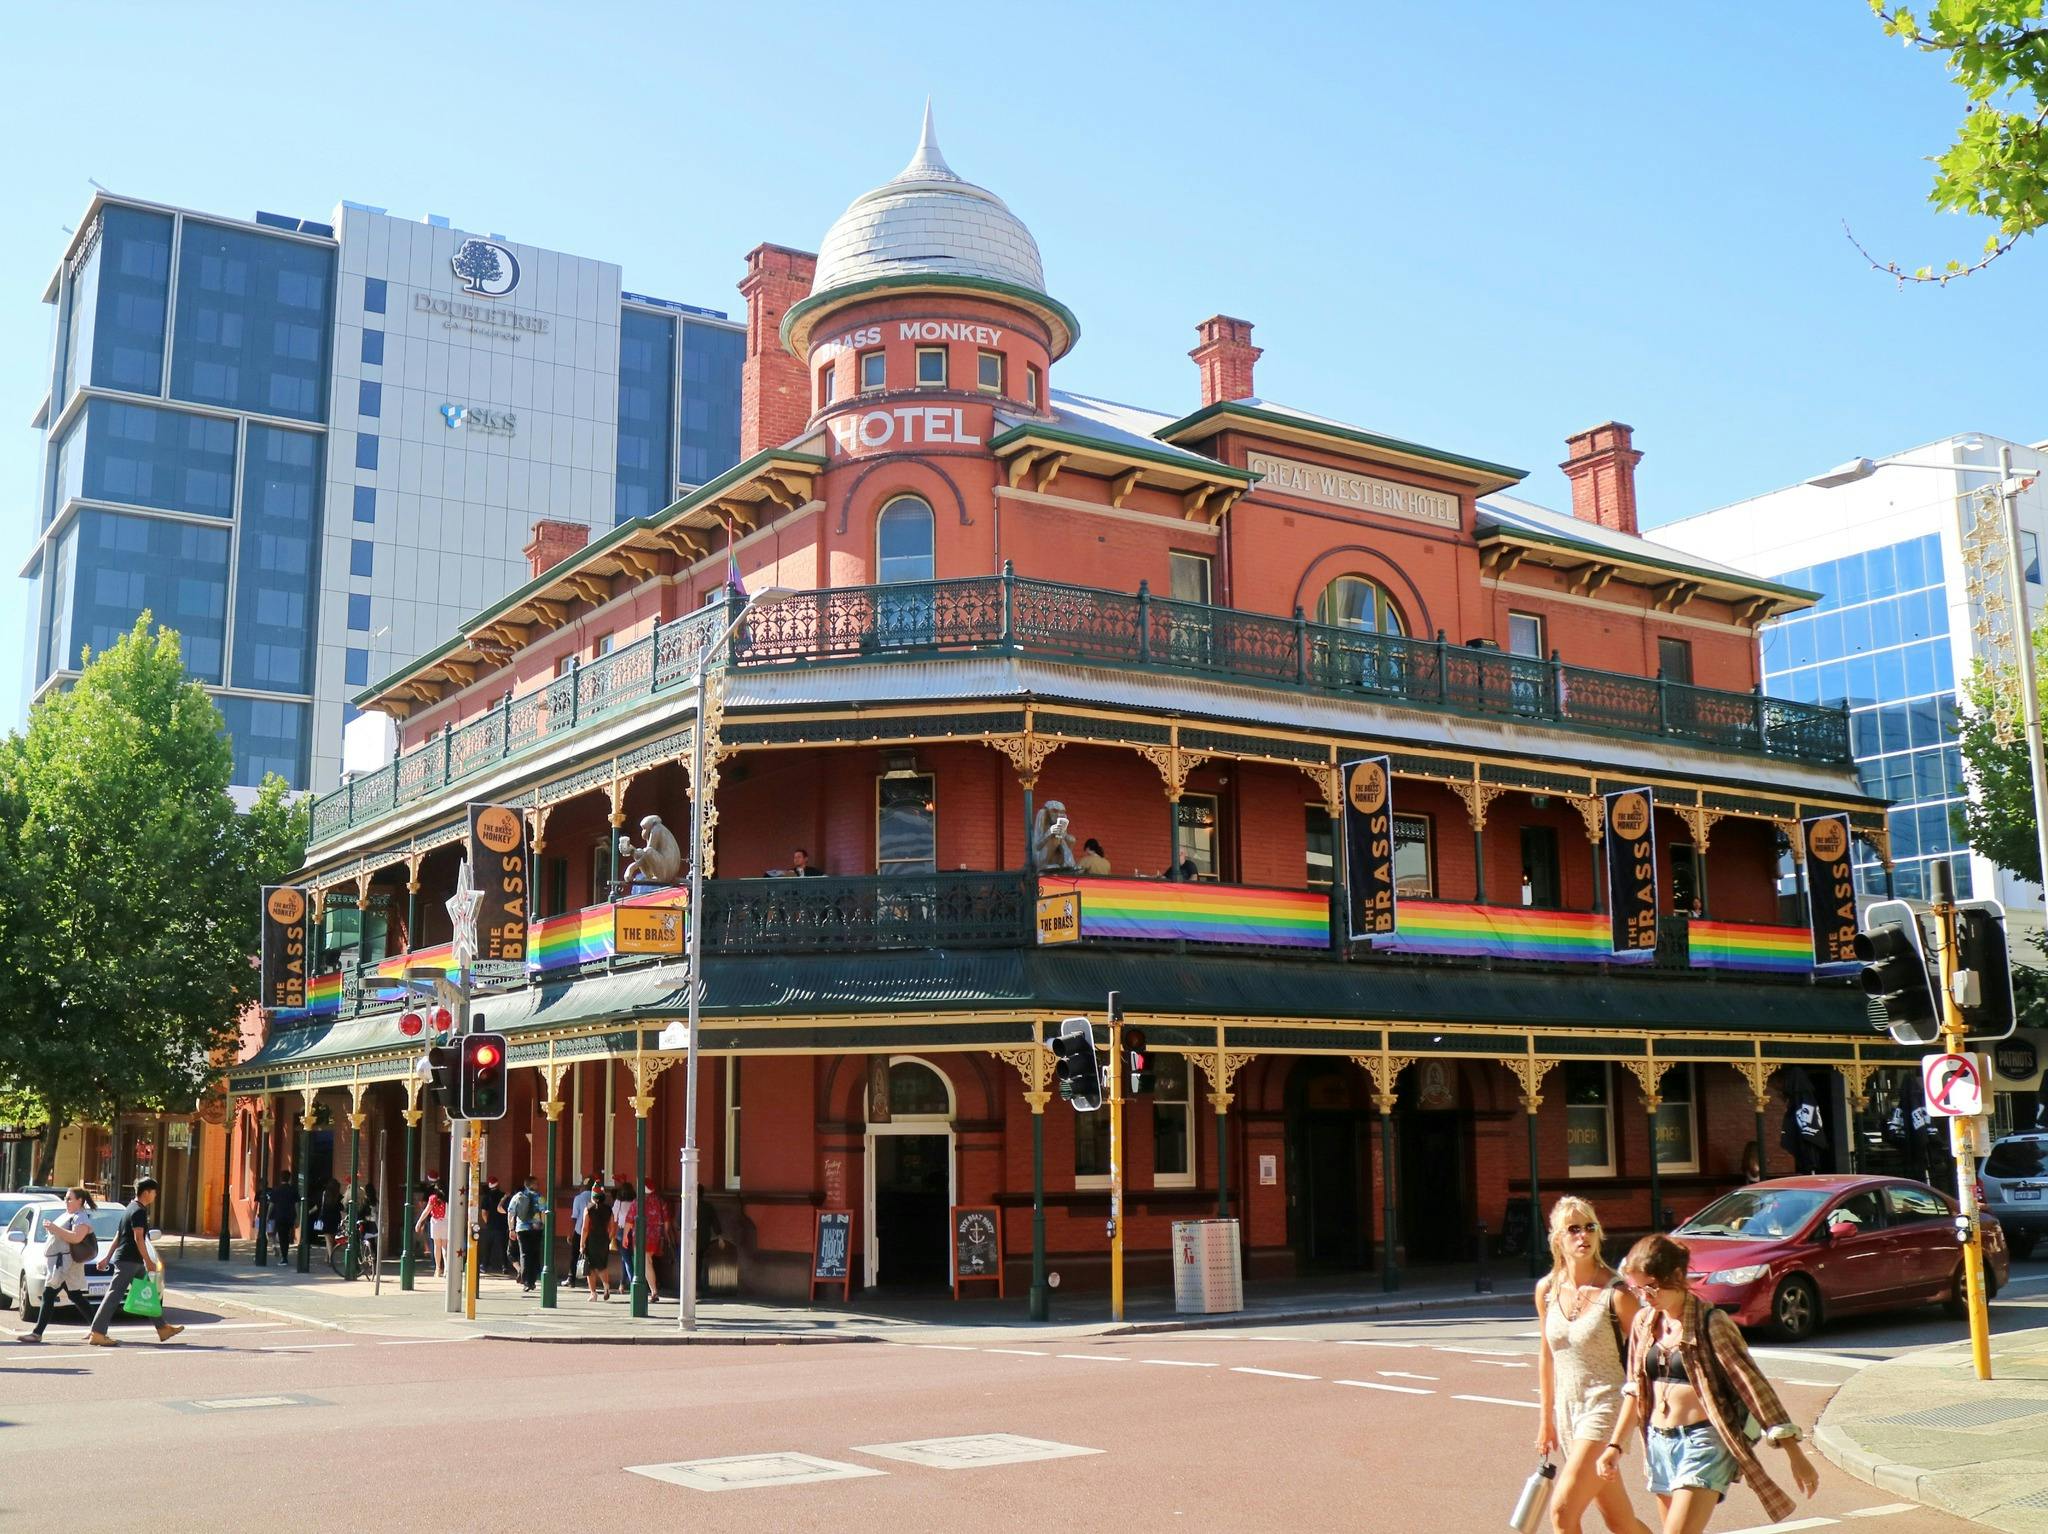 The Brass Monkey Hotel, Perth